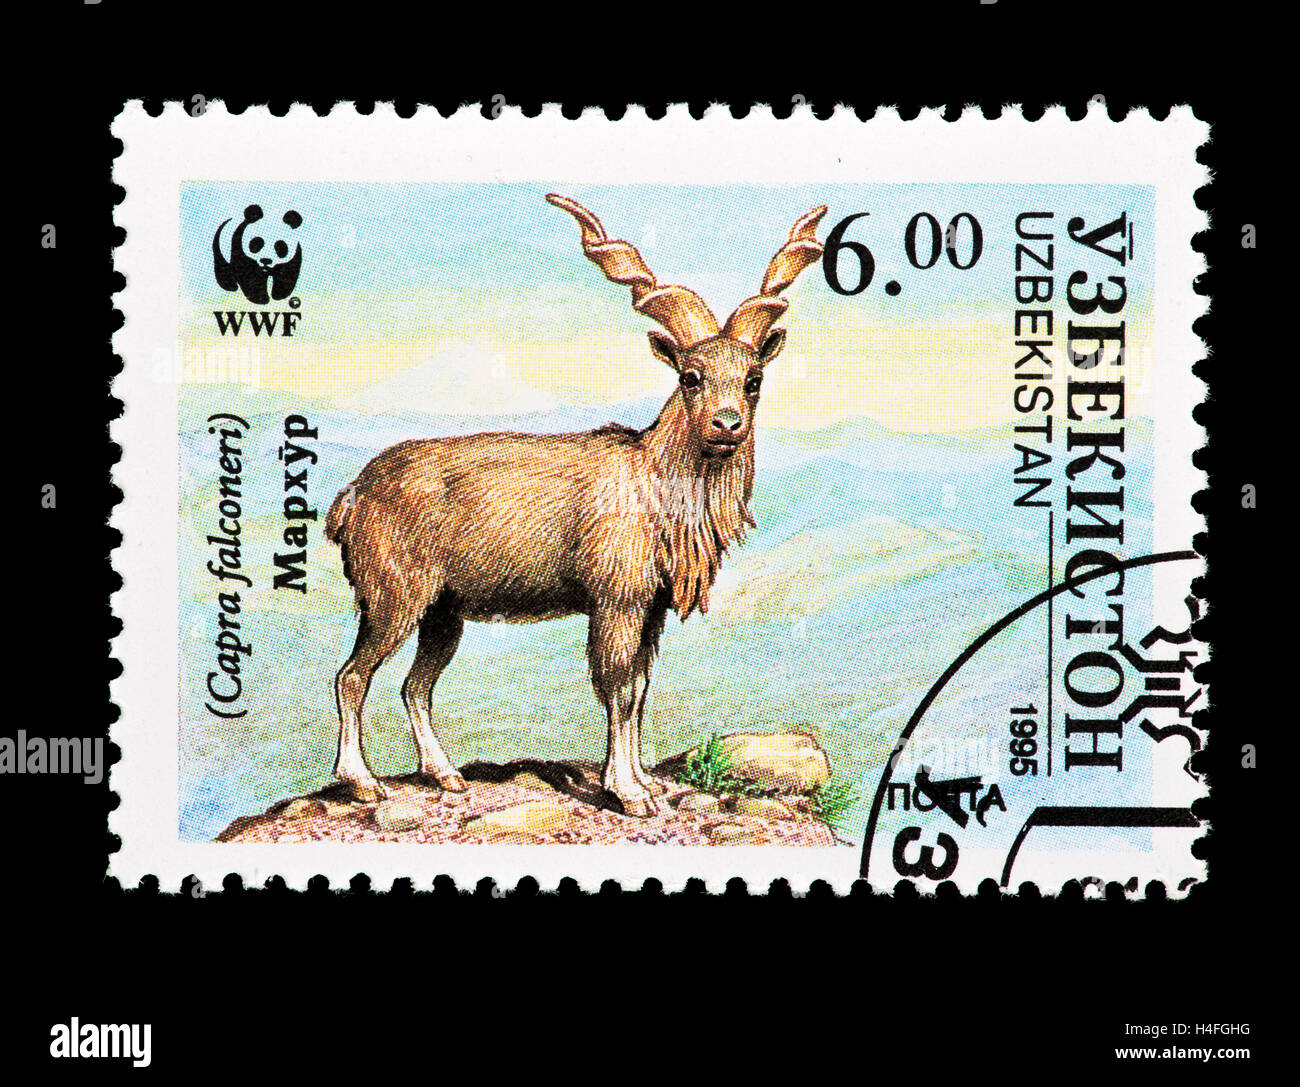 Postage stamp from Uzbekistan depicting a markhor (Capra falconeri) Stock Photo